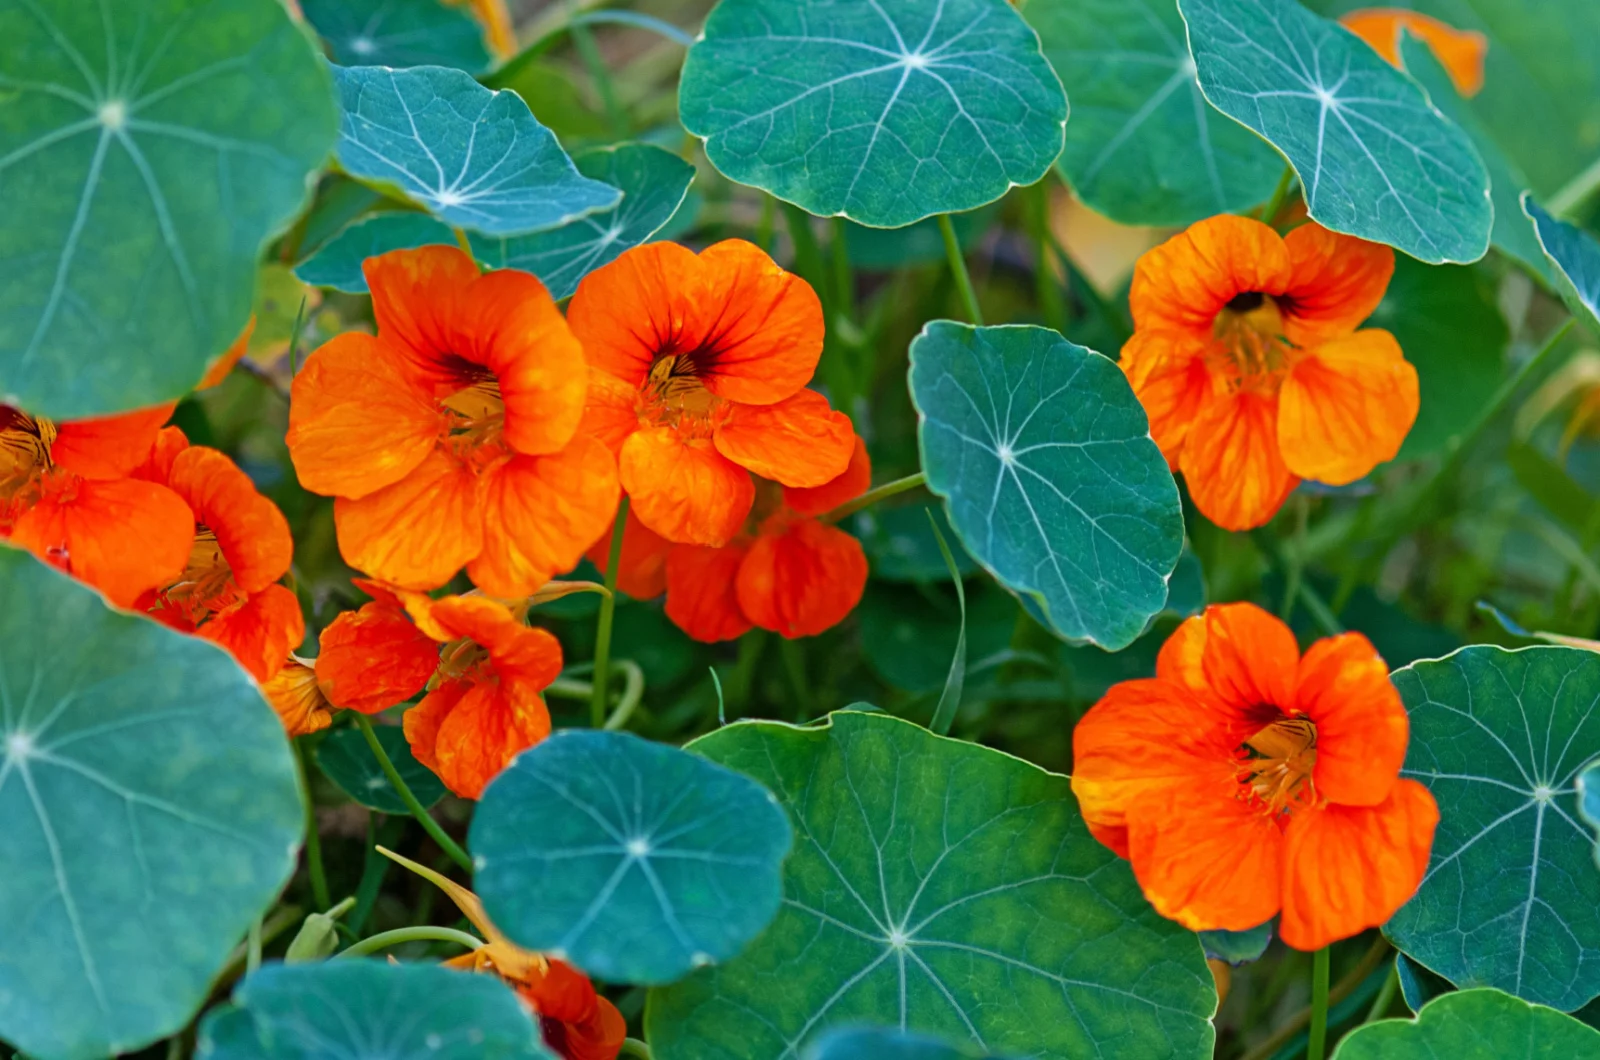 Nasturtium plant with round leaves and bright orange flowers